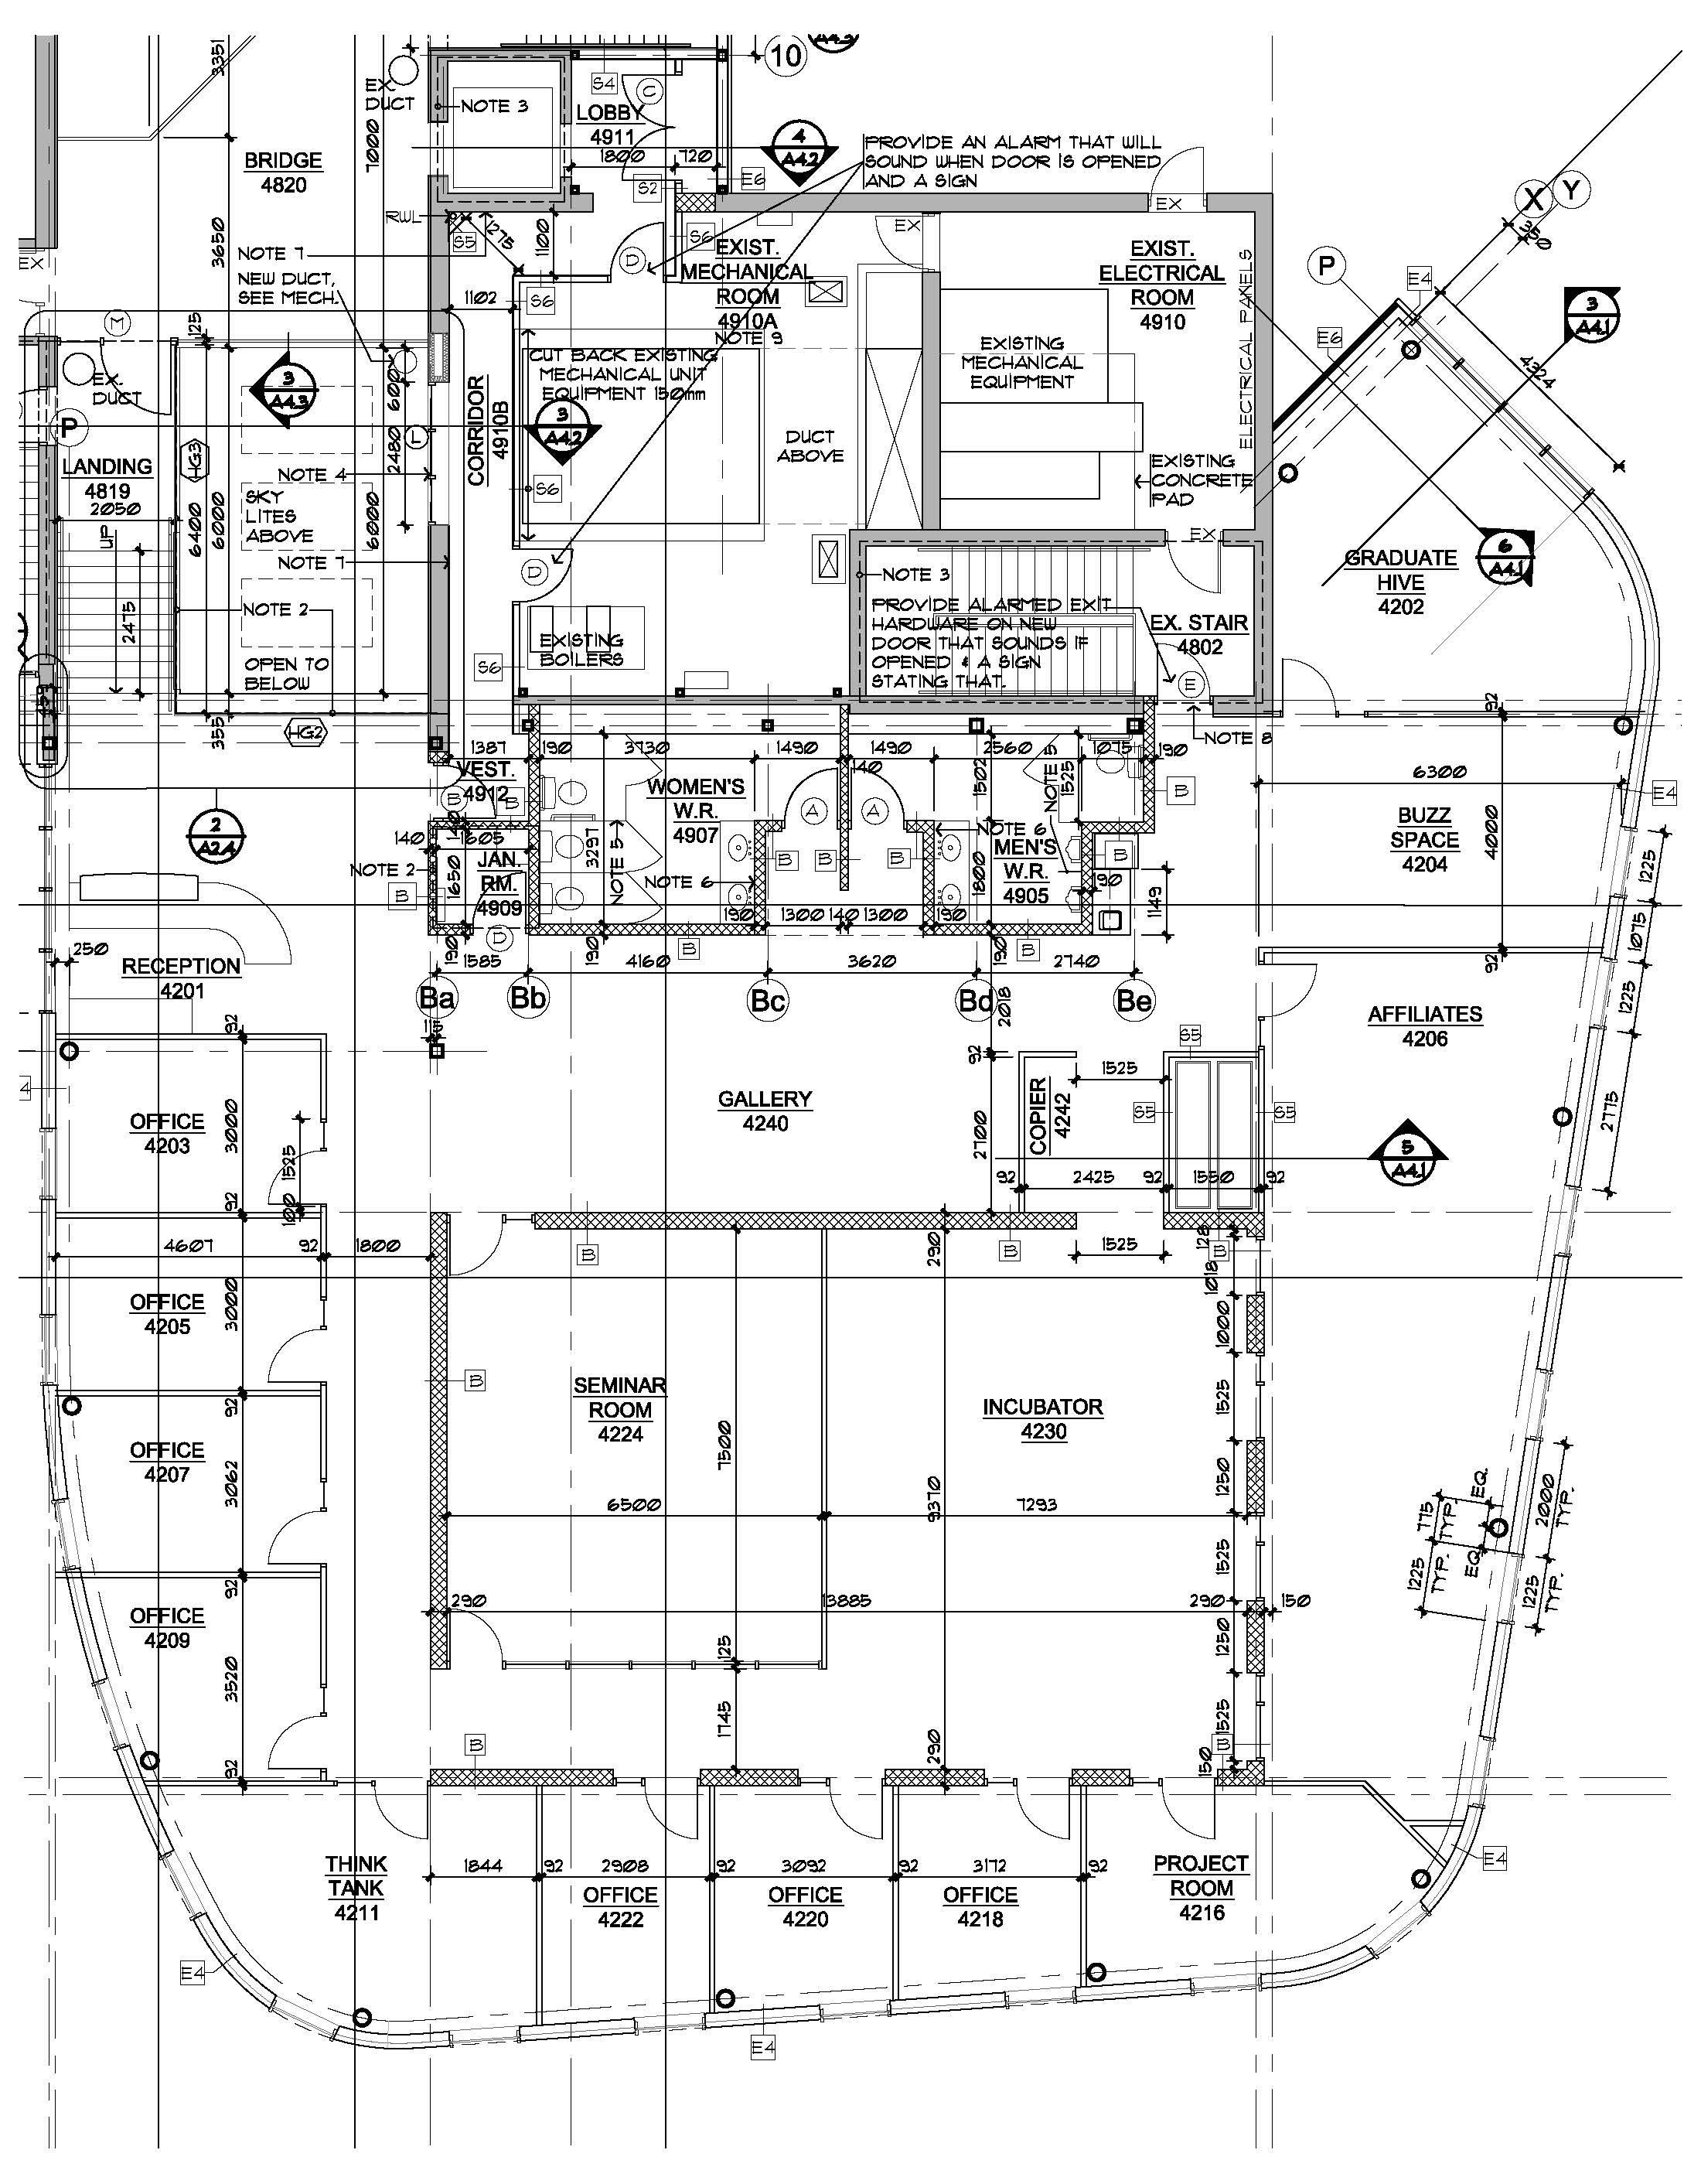 Floor plan for level four in detail.